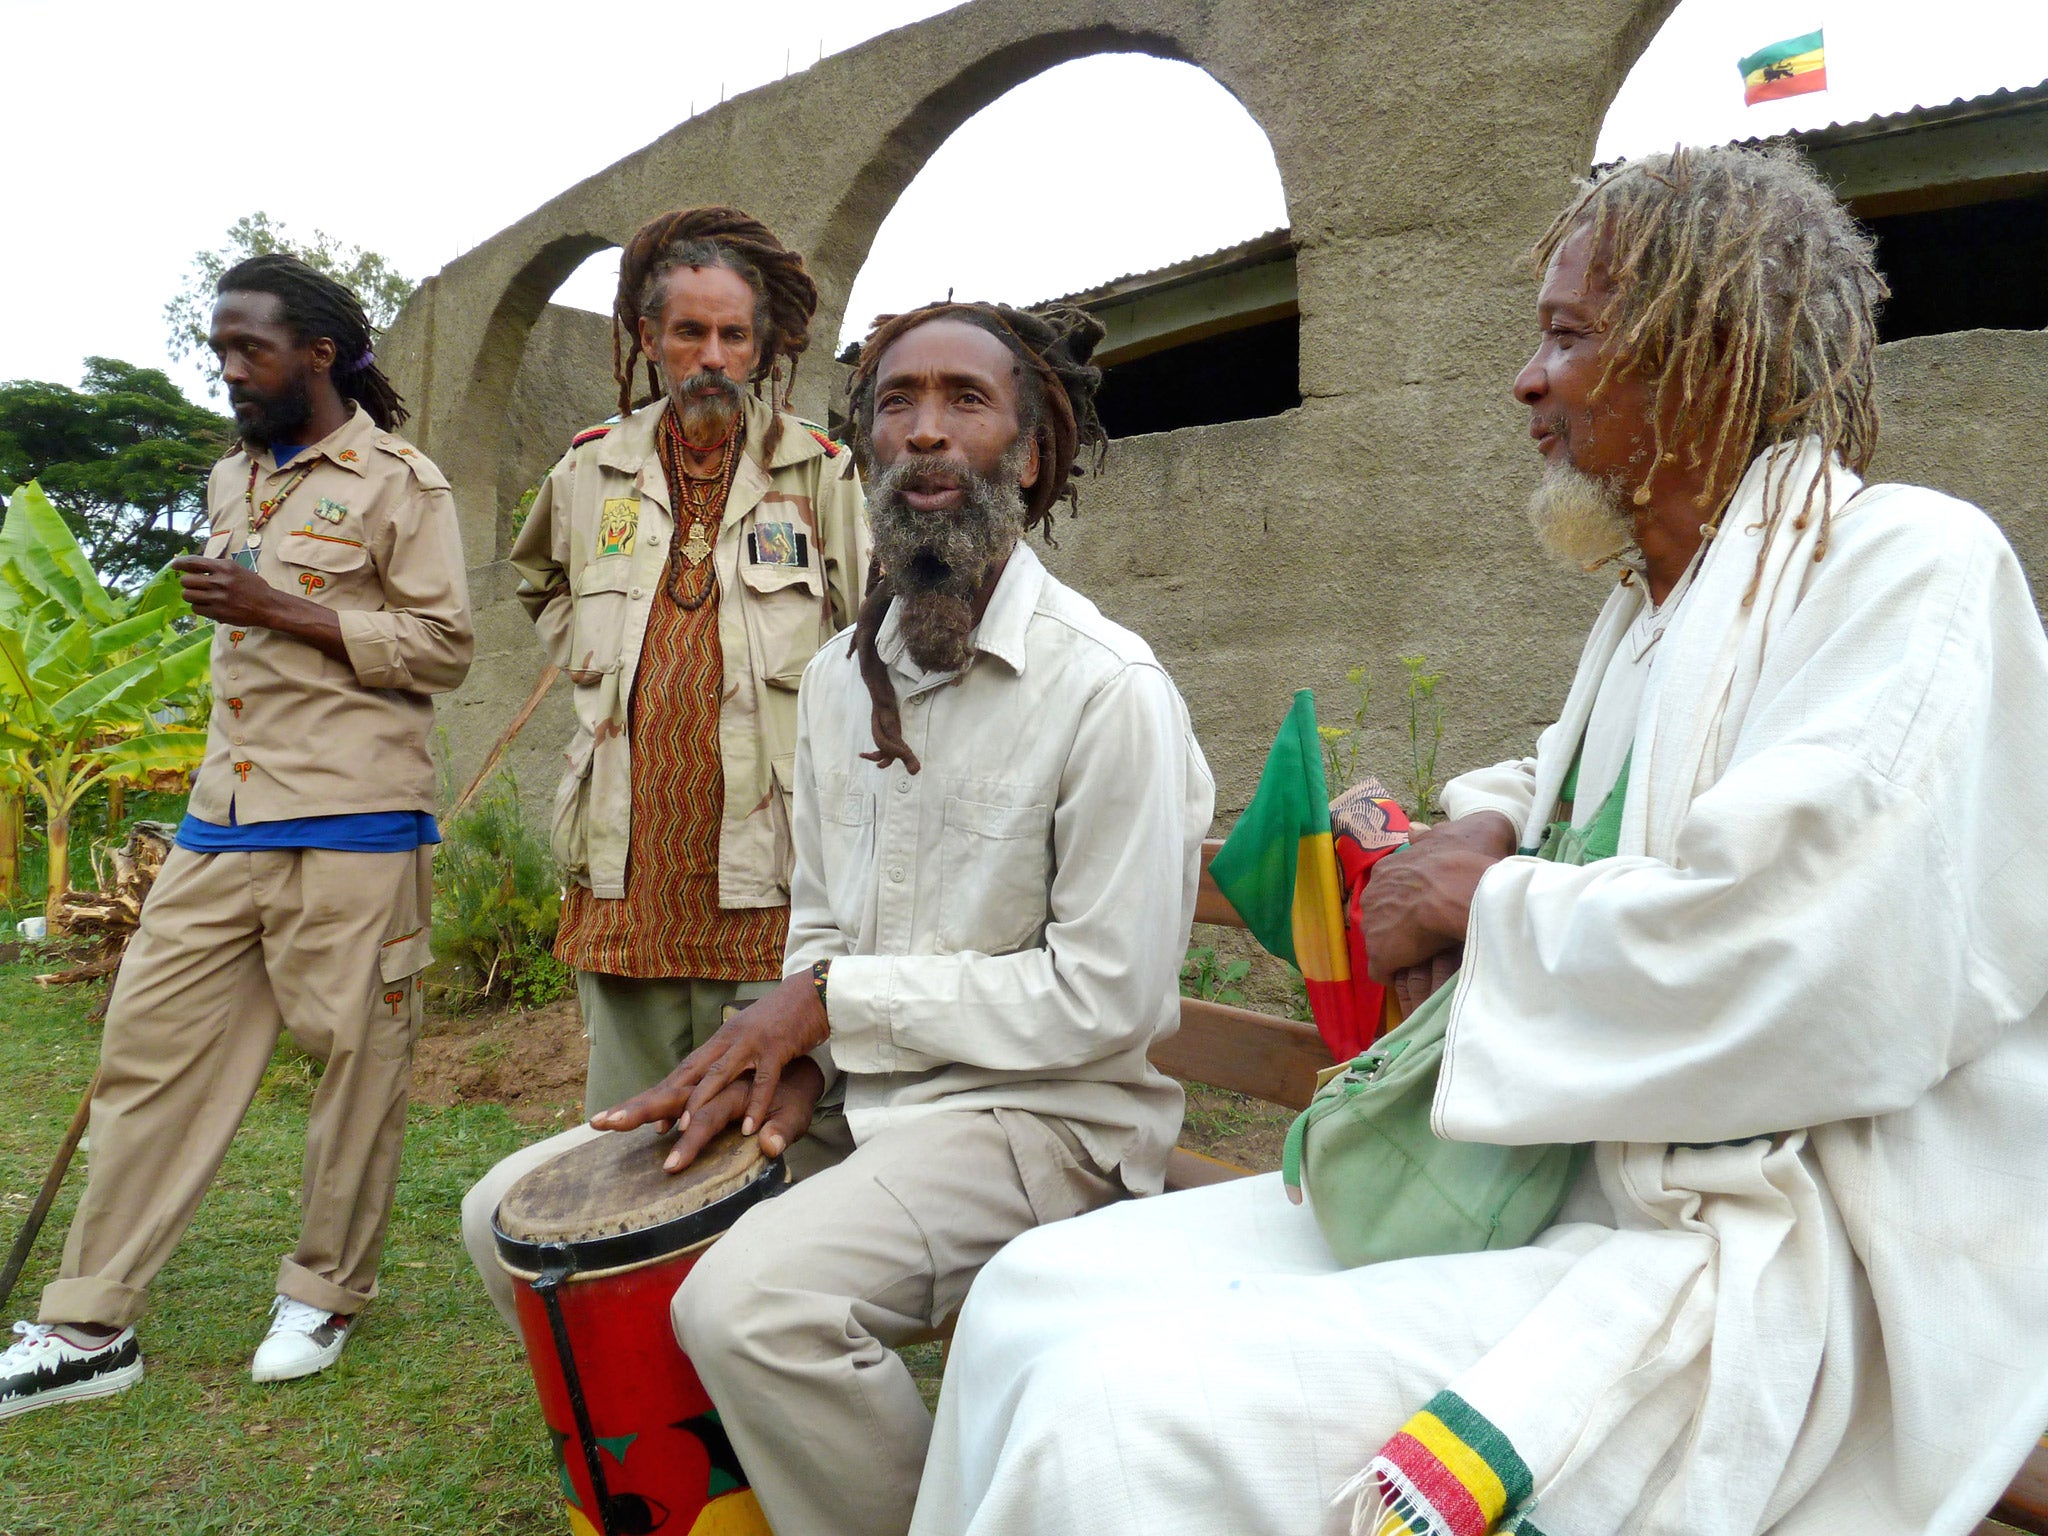 Rastafarians gather in Shashemene, Ethiopia on April 21, 2012 to celebrate the anniversary of Ethiopian Emperor Haile Selassie’s visit to Jamaica in 1966